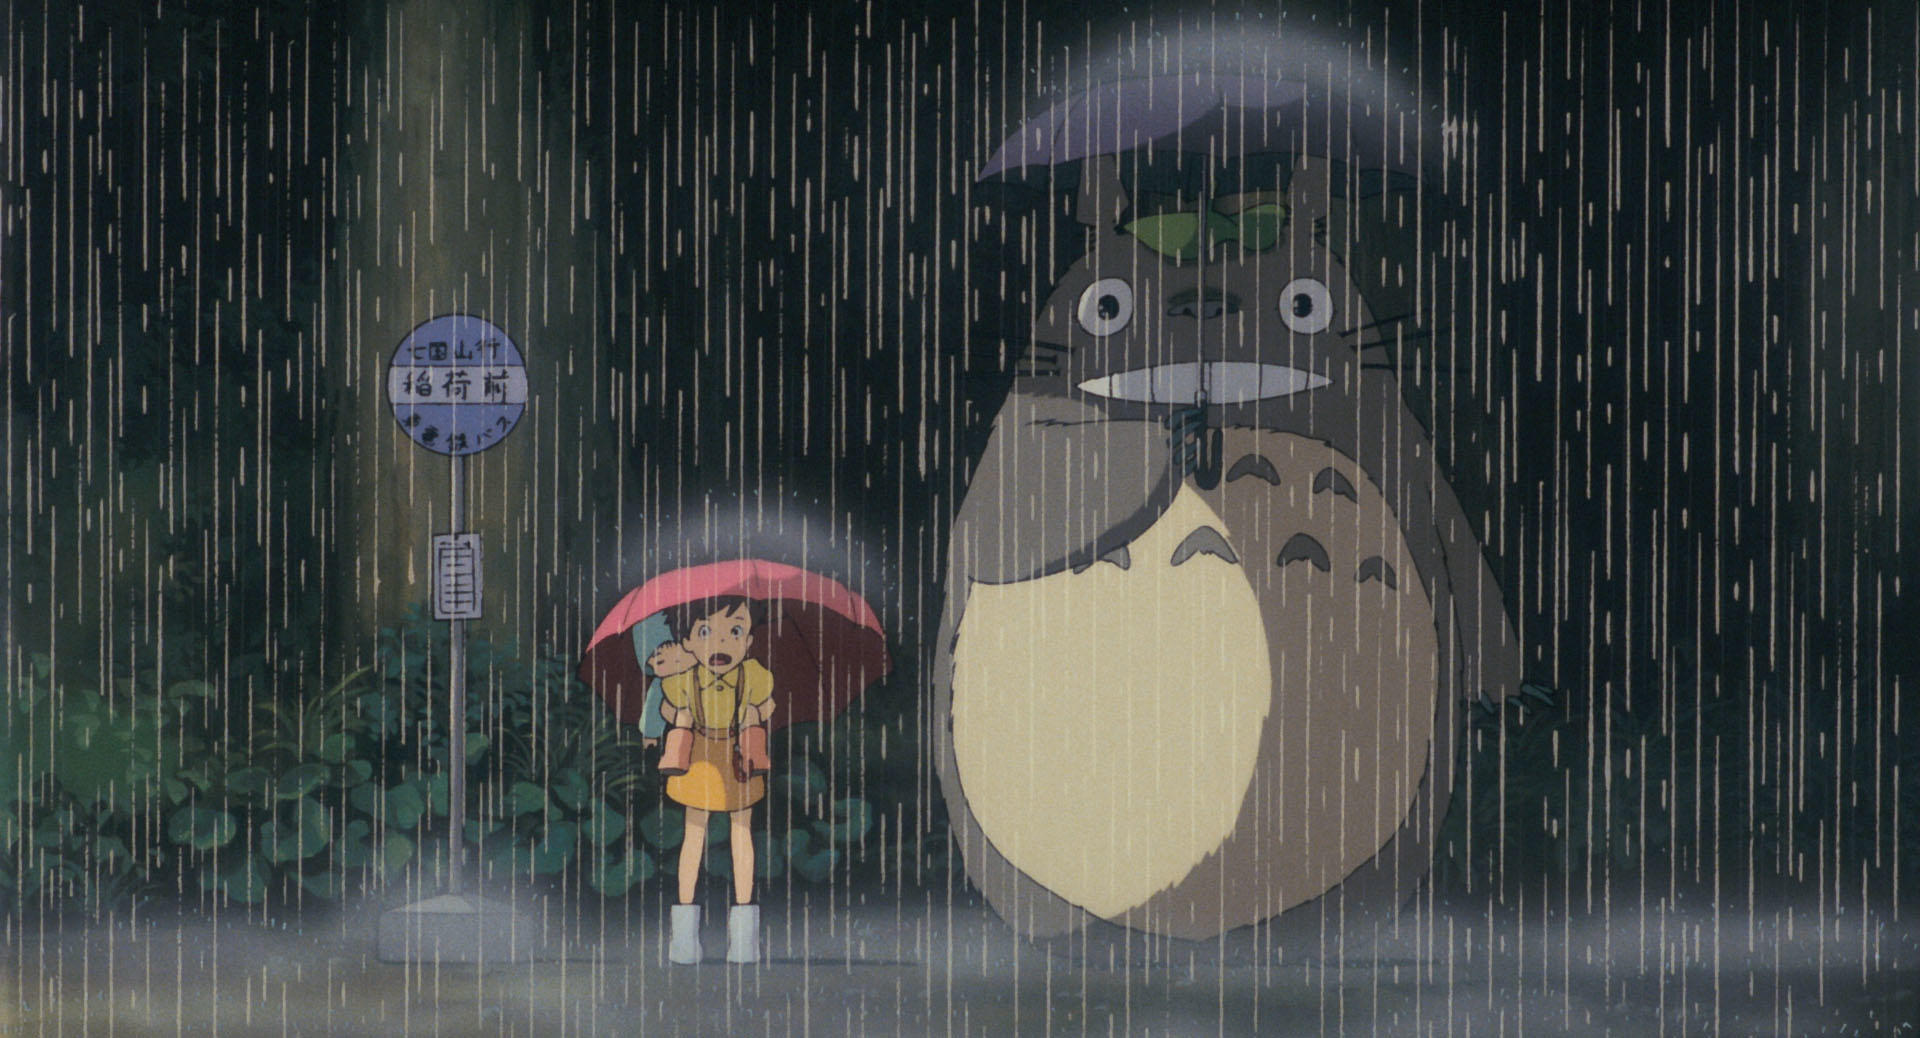 Japanese Animation Transcends Borders